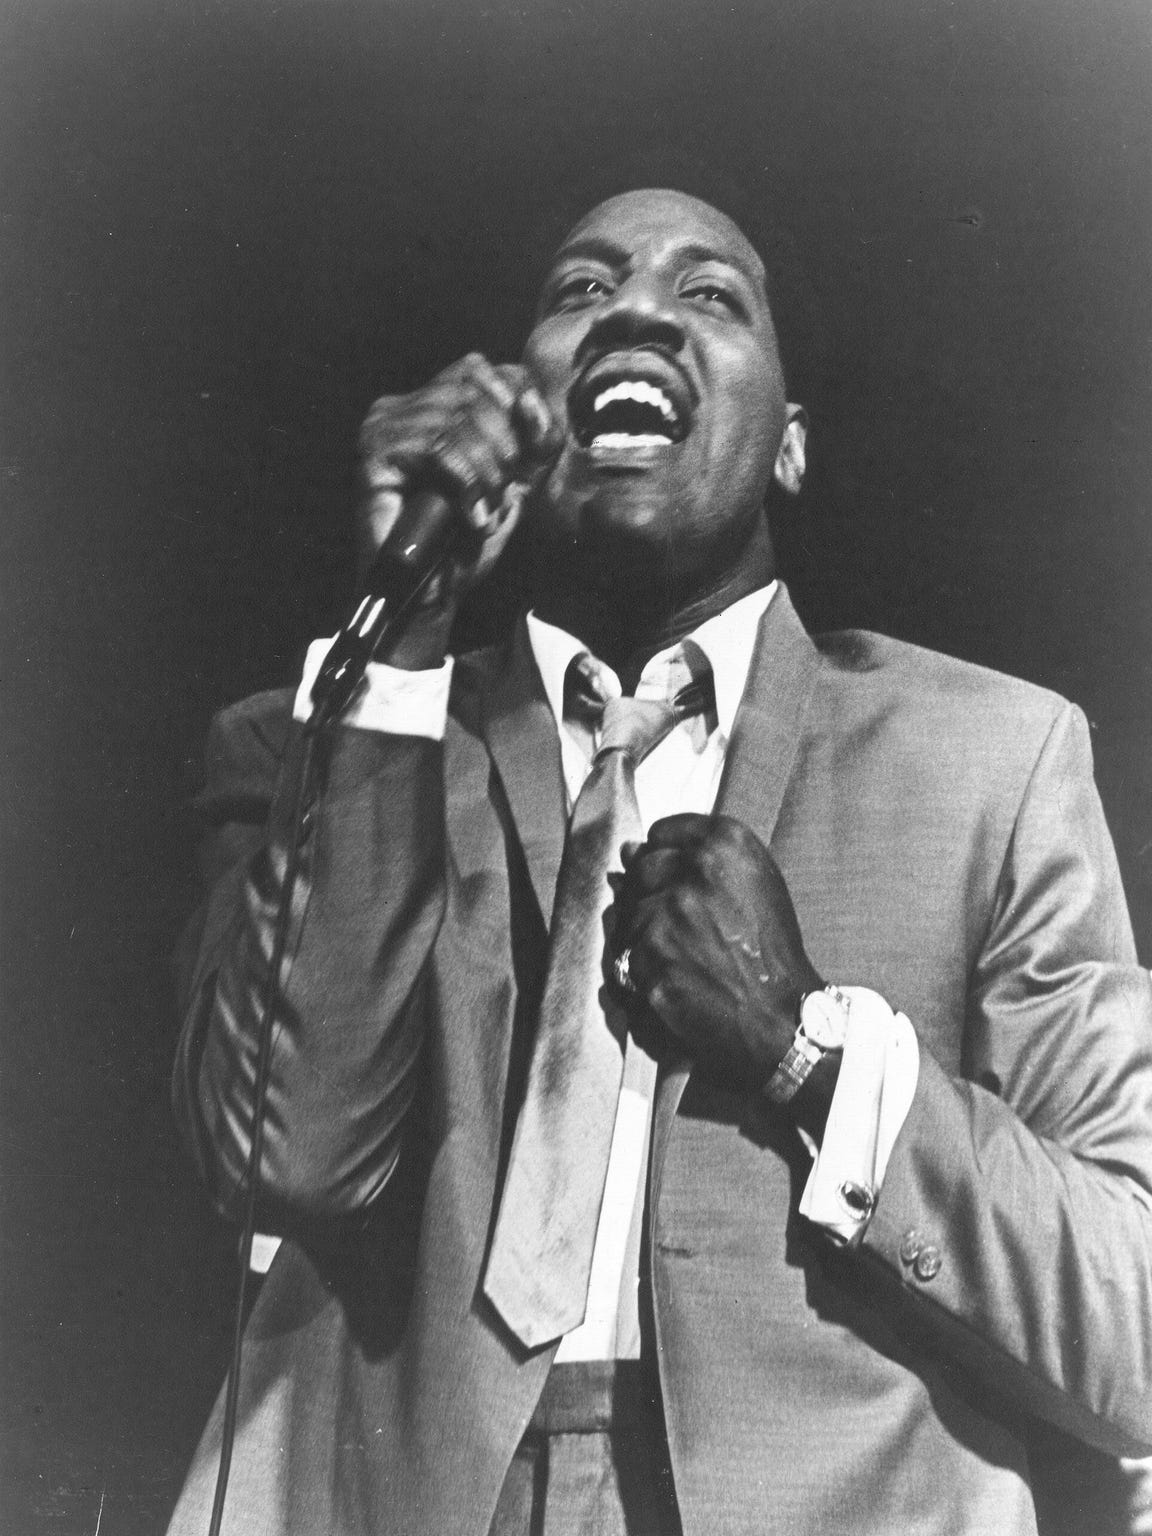 Otis Redding performs in 1967.